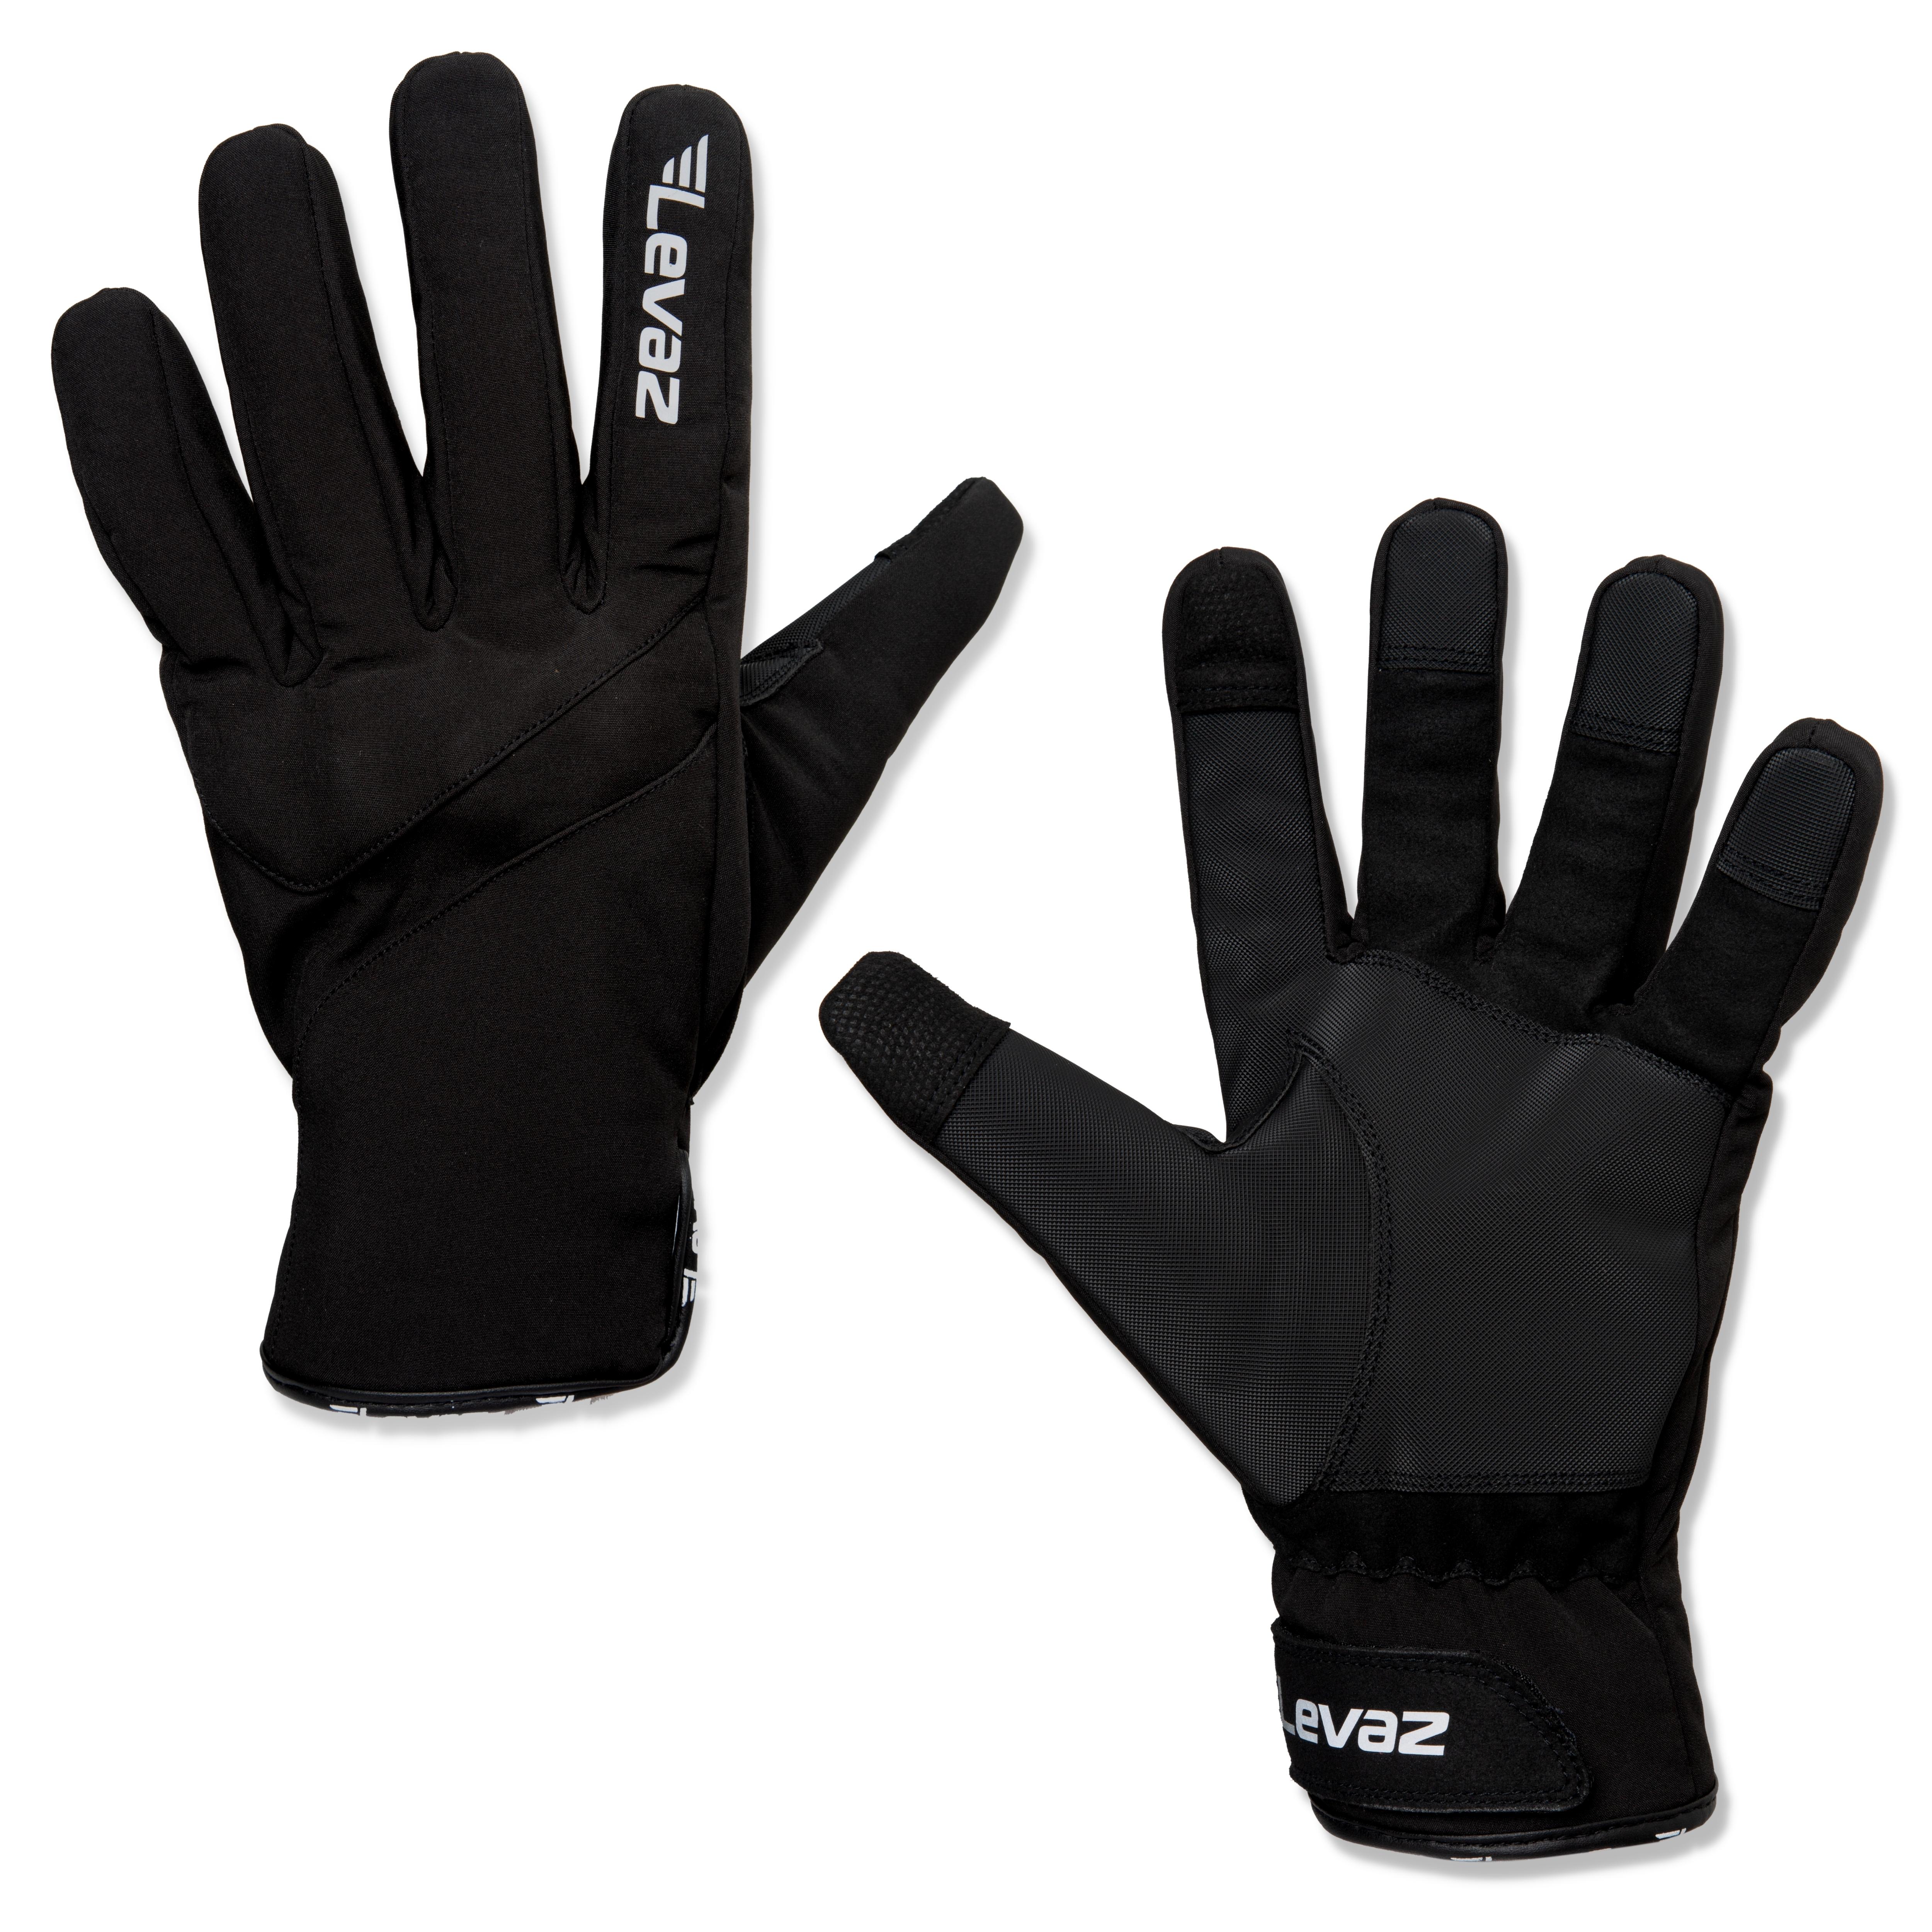 Winter-Fahrradhandschuh-schwarz-Handschuh